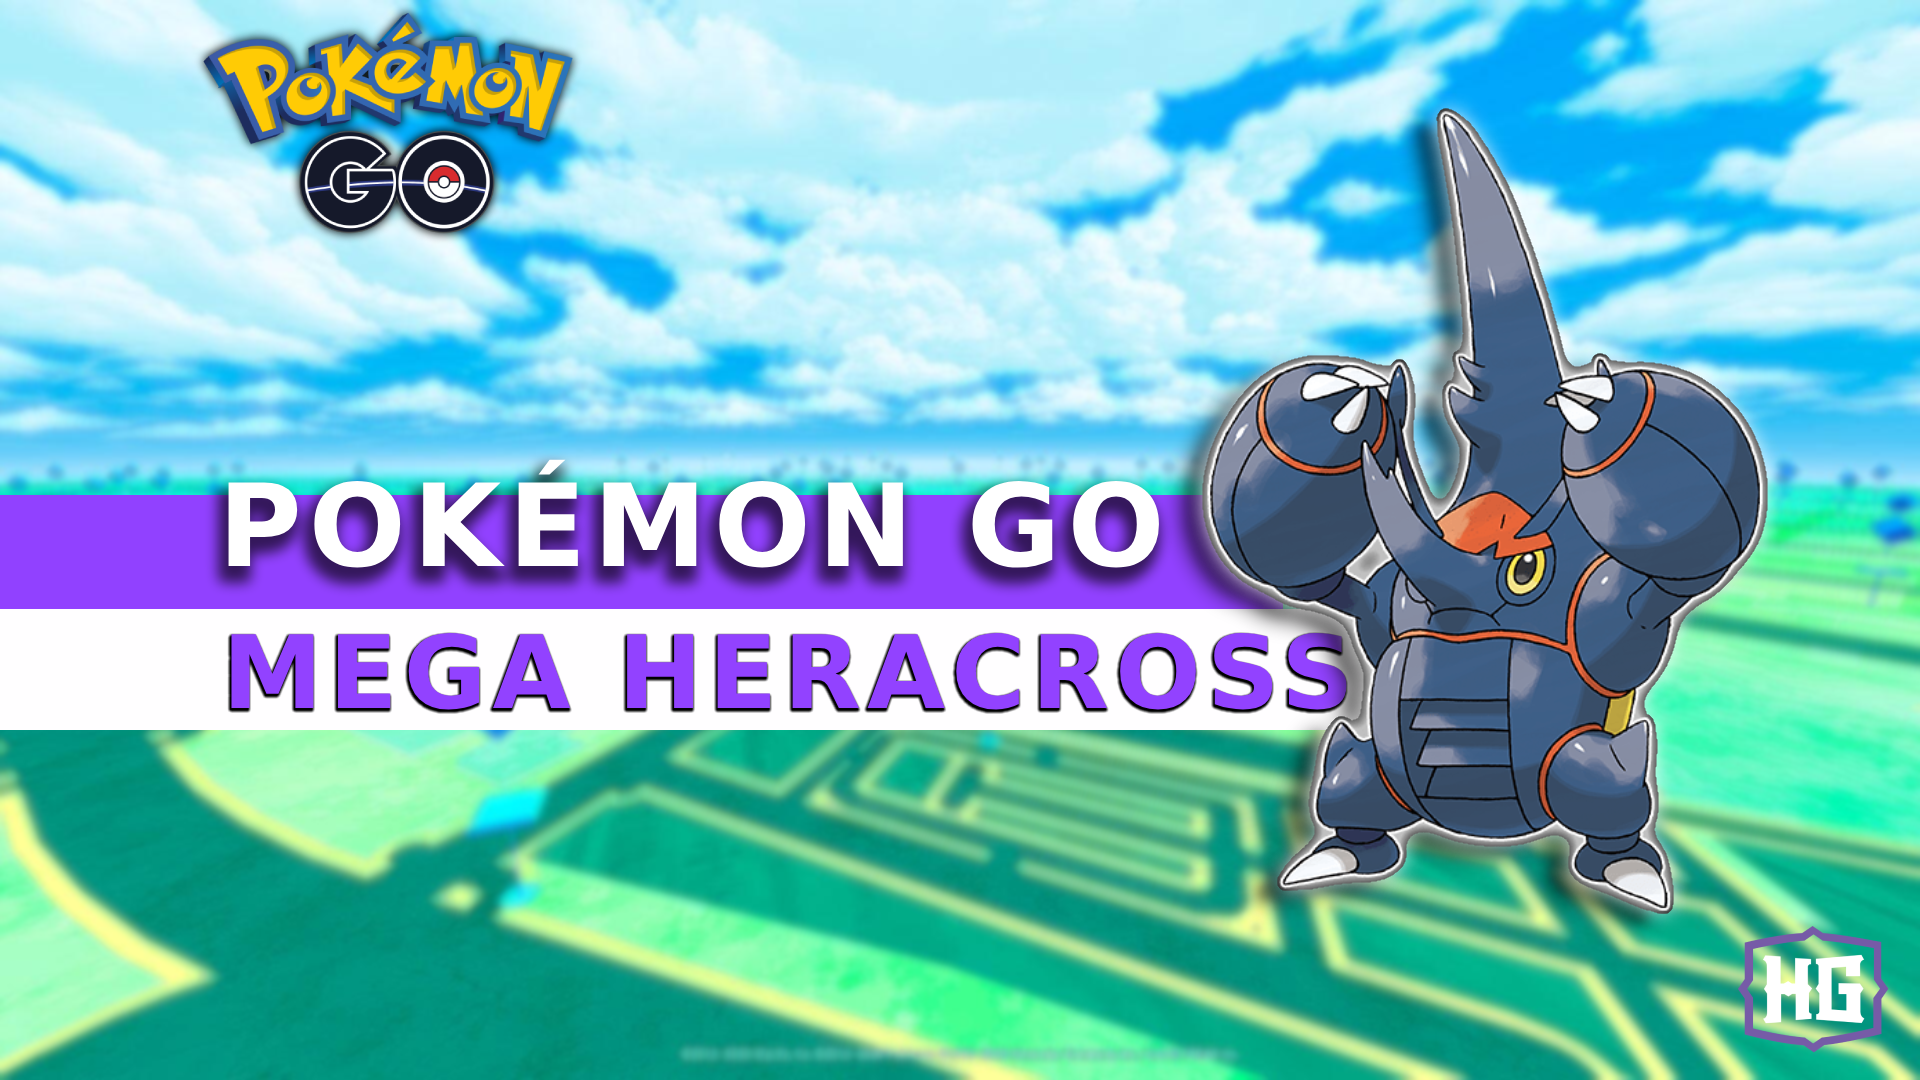 Pokémon GO: Mega Heracross Raid Guide